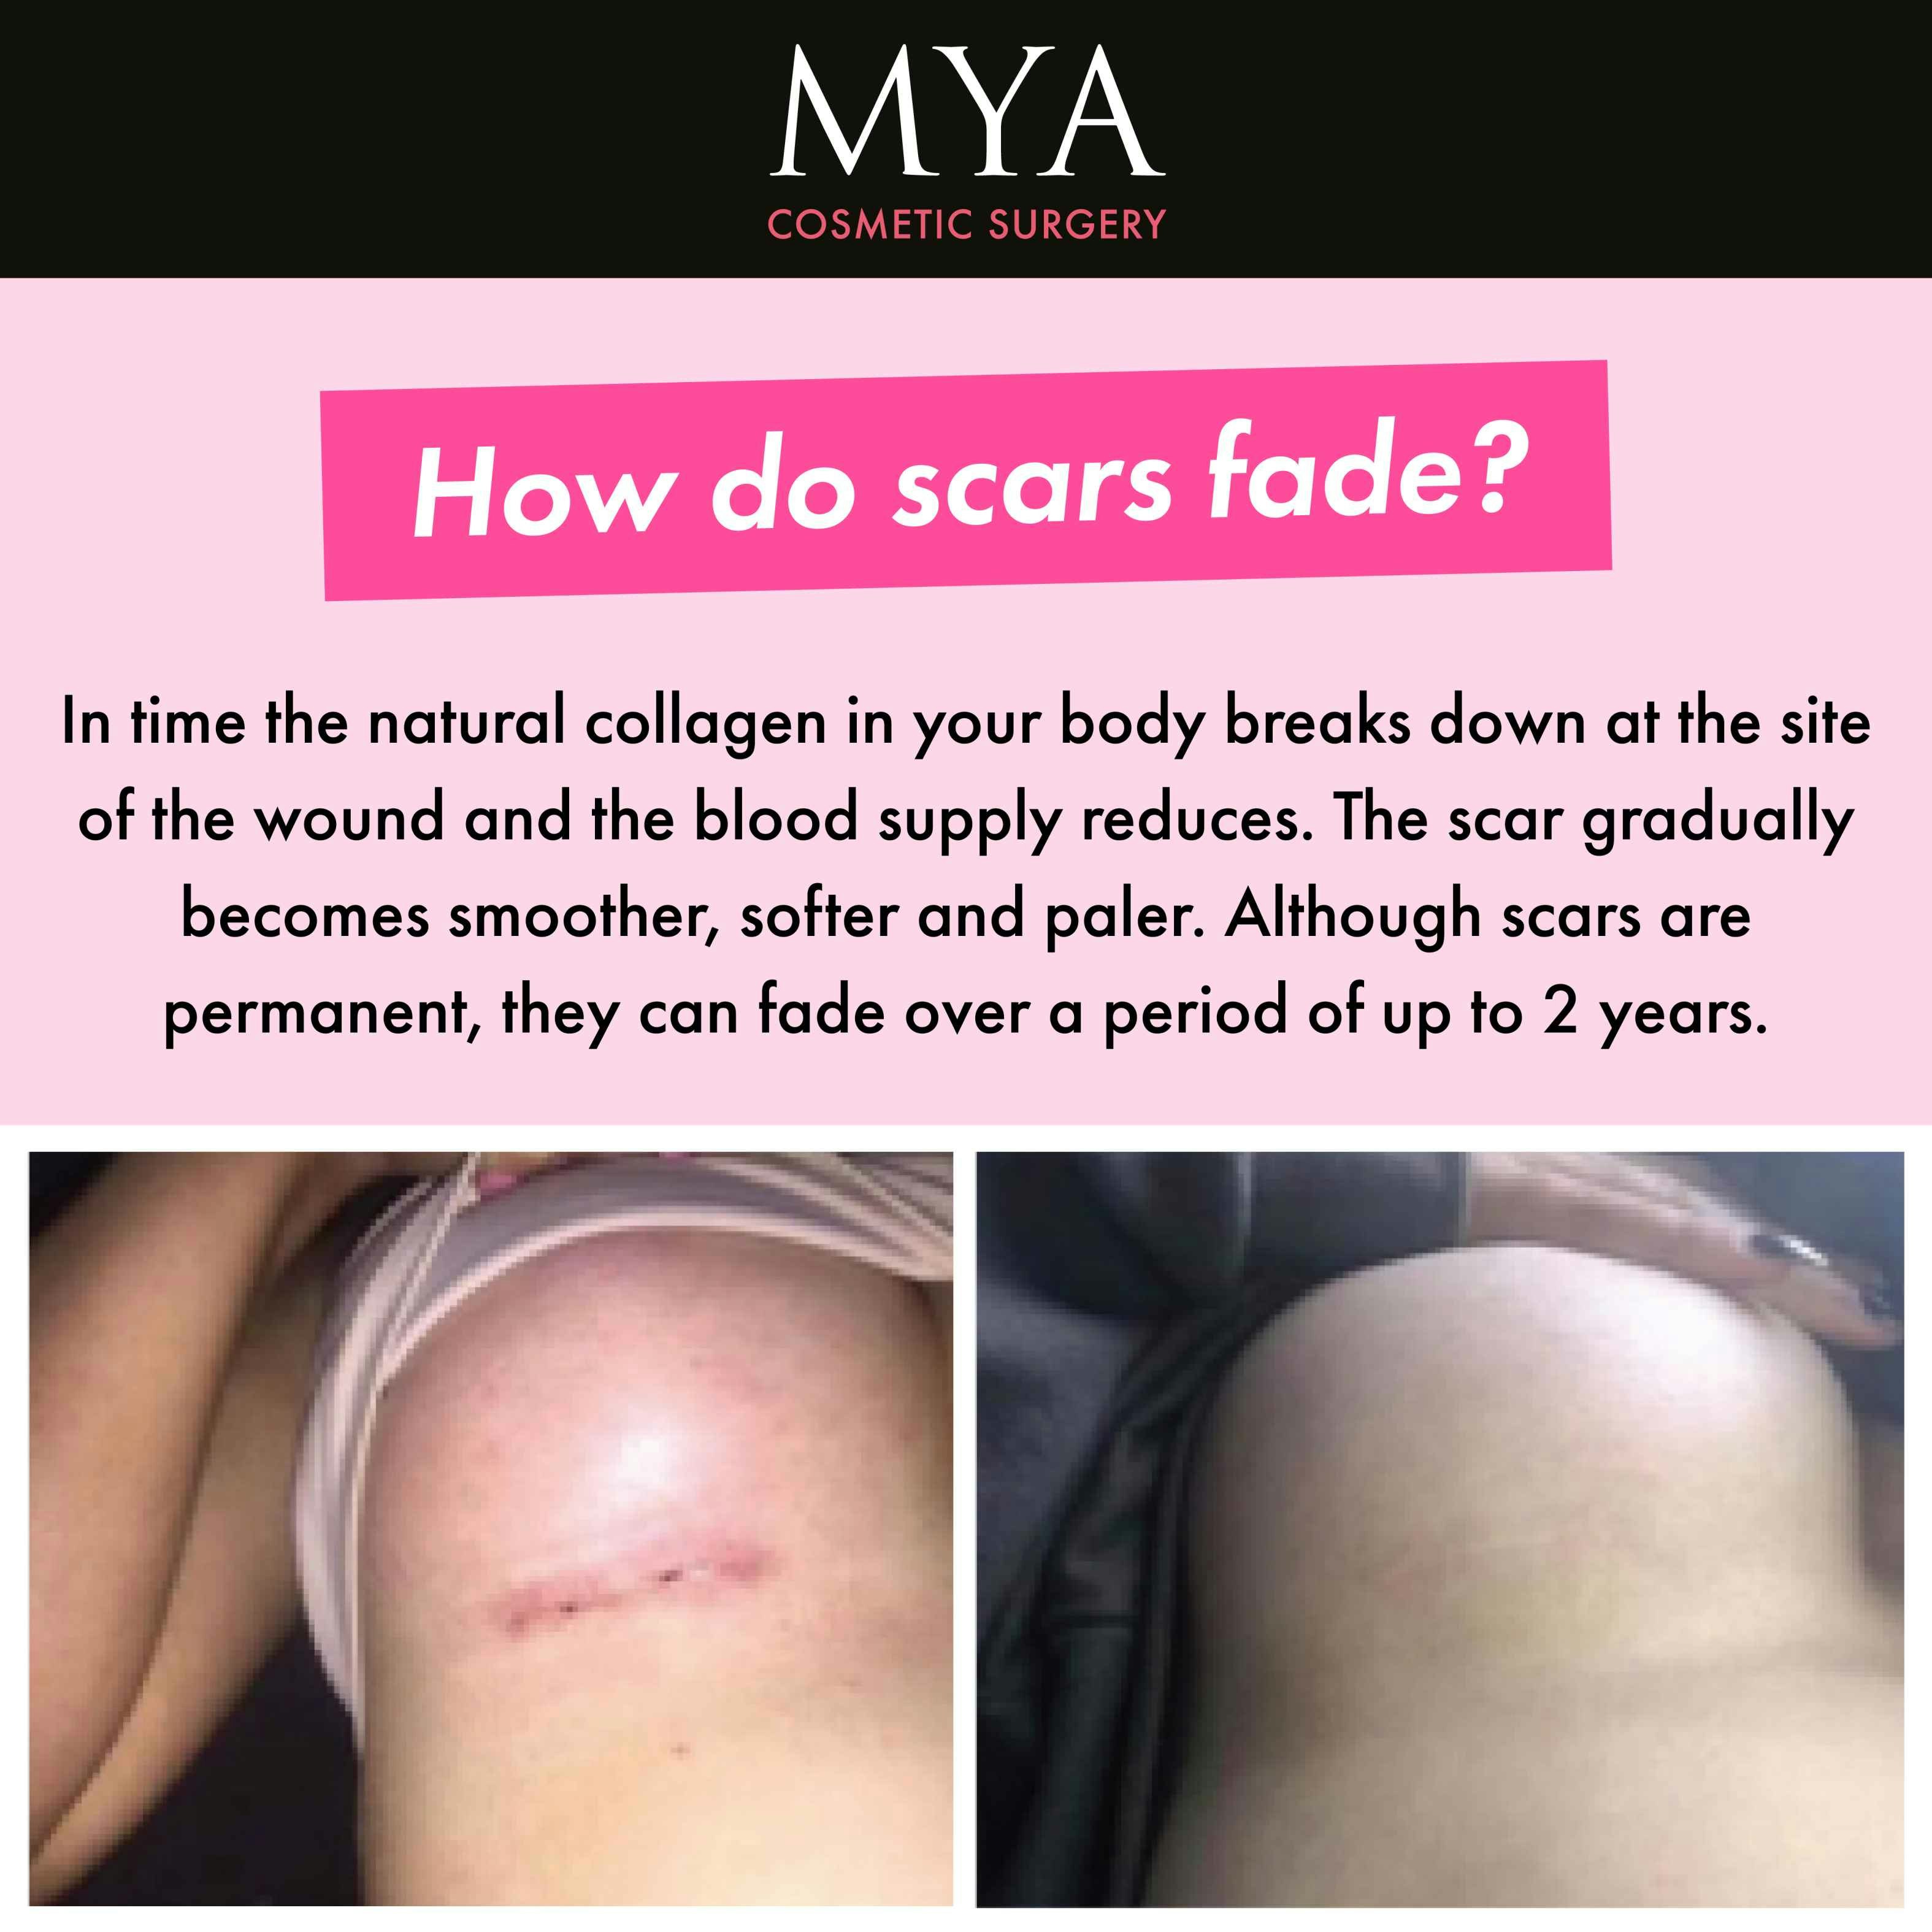 How do scars fade?